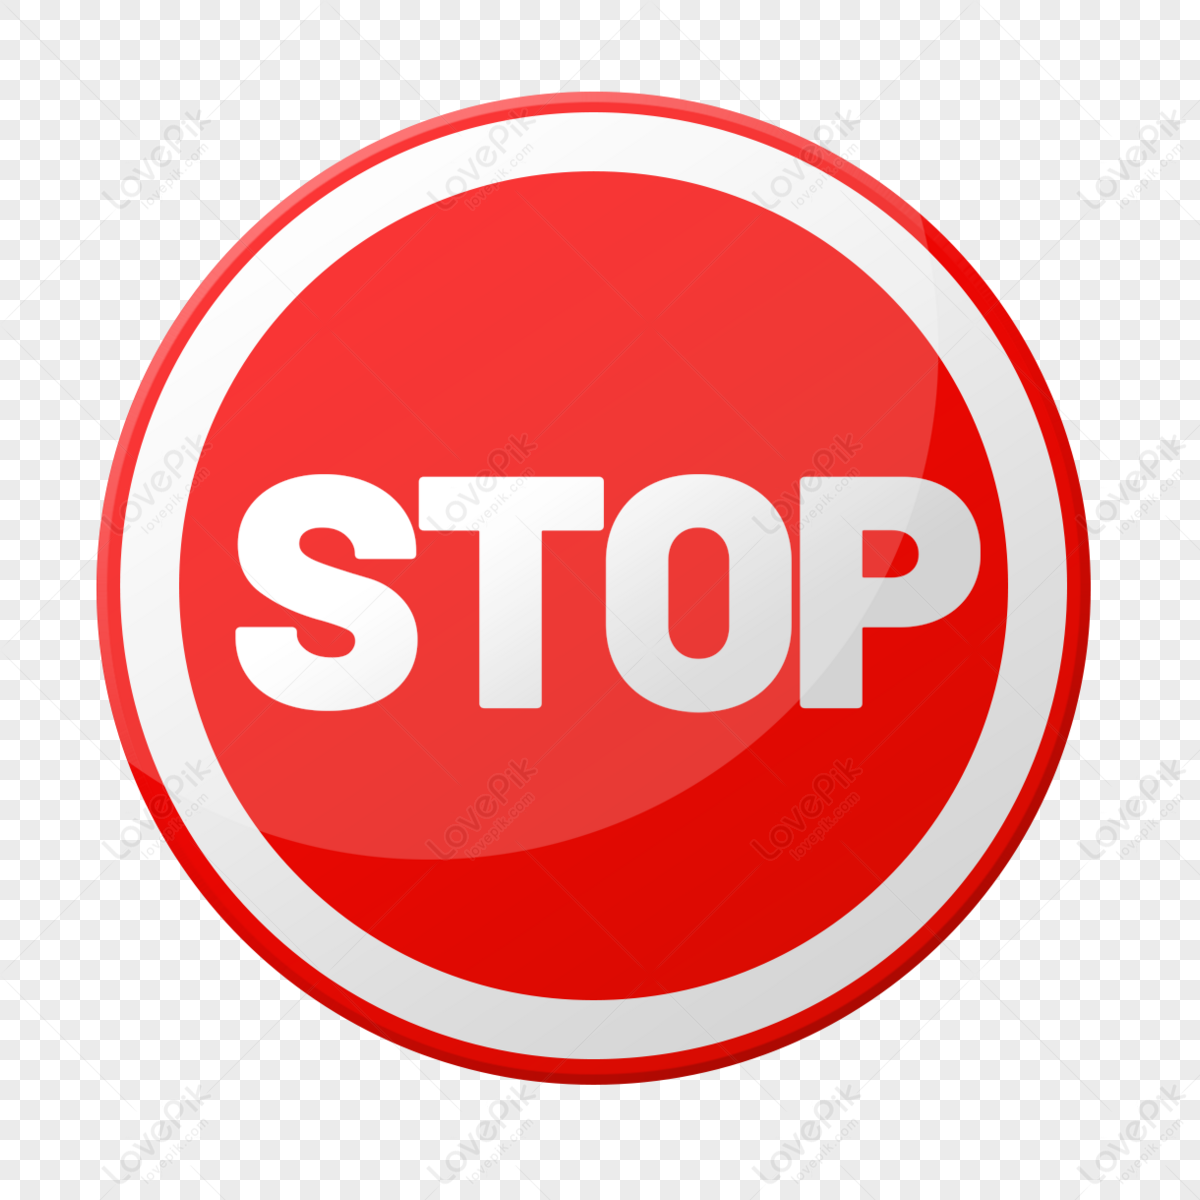 Safety Illustration Vector PNG Images, Attention Safety Logo Illustration,  Attention Clipart, Be Careful, Road Traffic Sign PNG Image For Free Download